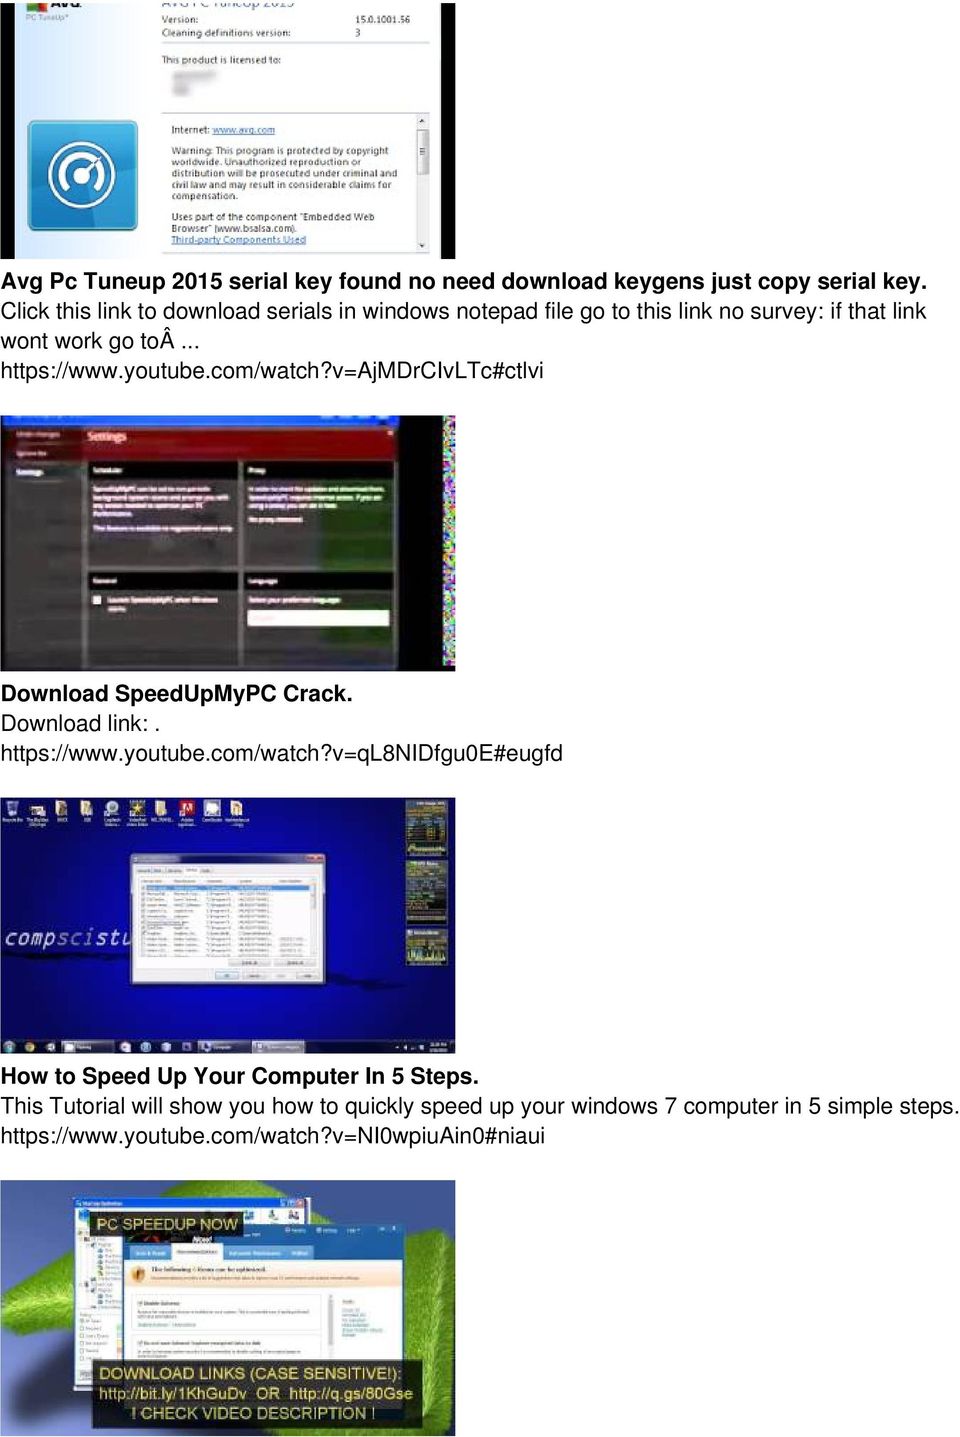 youtube.com/watch?v=ajmdrcivltc#ctlvi Download SpeedUpMyPC Crack. Download link:. https://www.youtube.com/watch?v=ql8nidfgu0e#eugfd How to Speed Up Your Computer In 5 Steps.